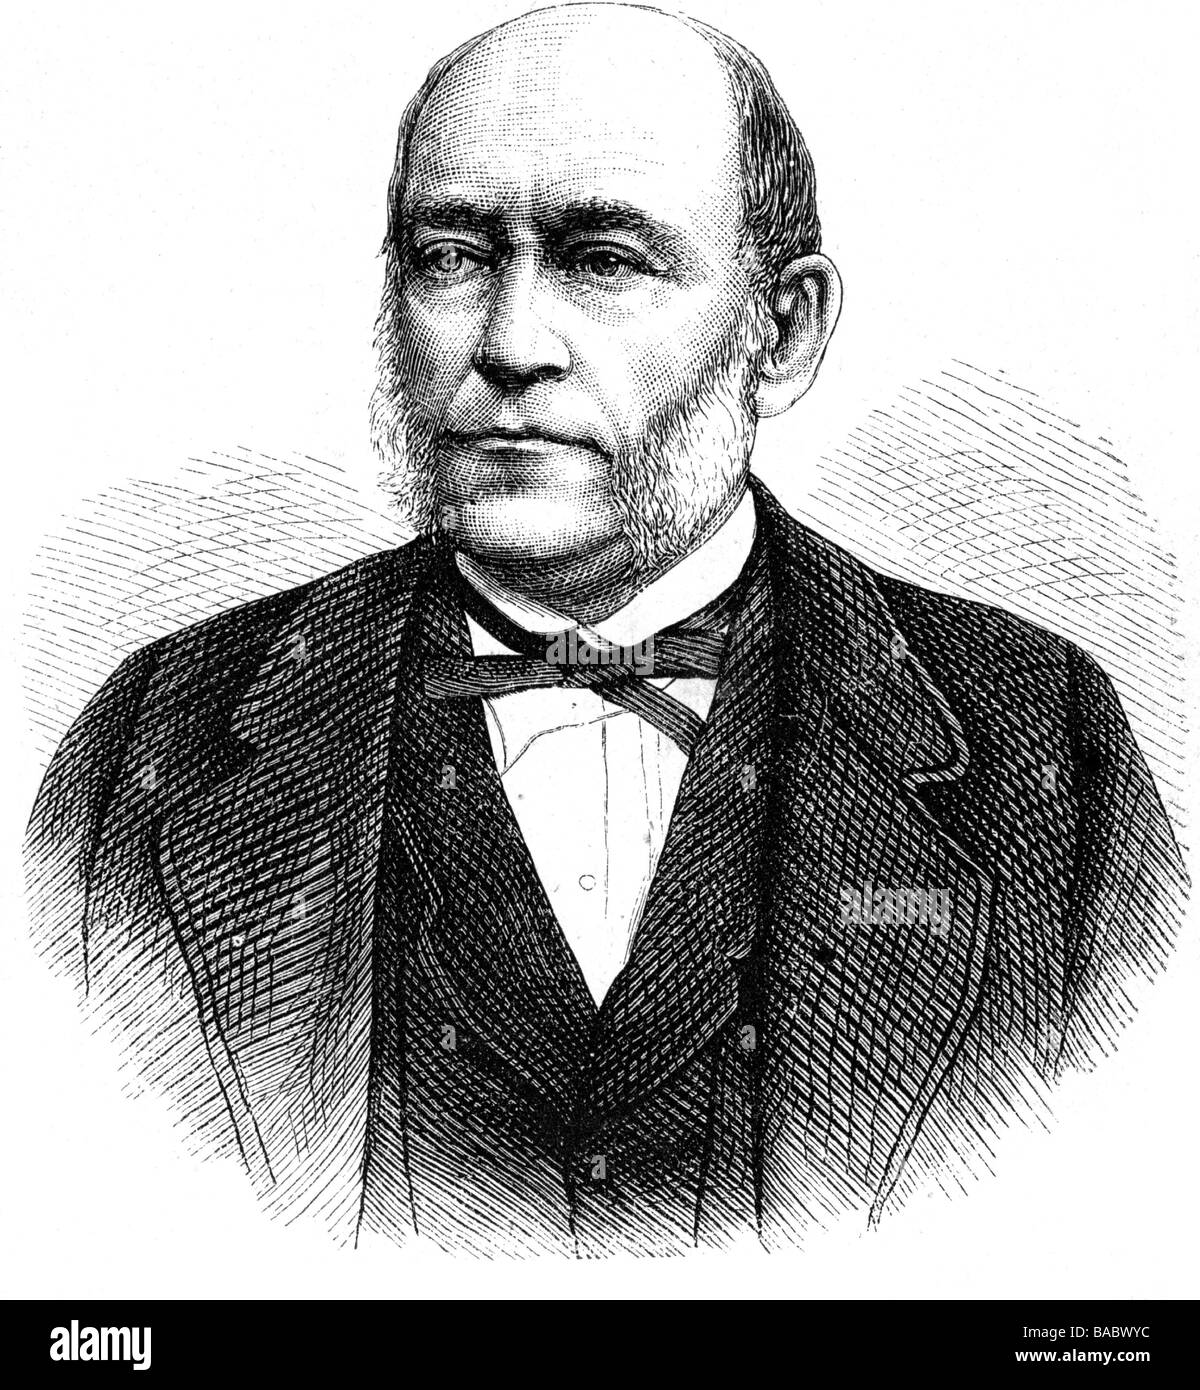 Rokitansky, Carl Baron von, 19.2.1804 - 23.7.1878, Bohemian physician, portrait, wood engraving, 19th century, Stock Photo